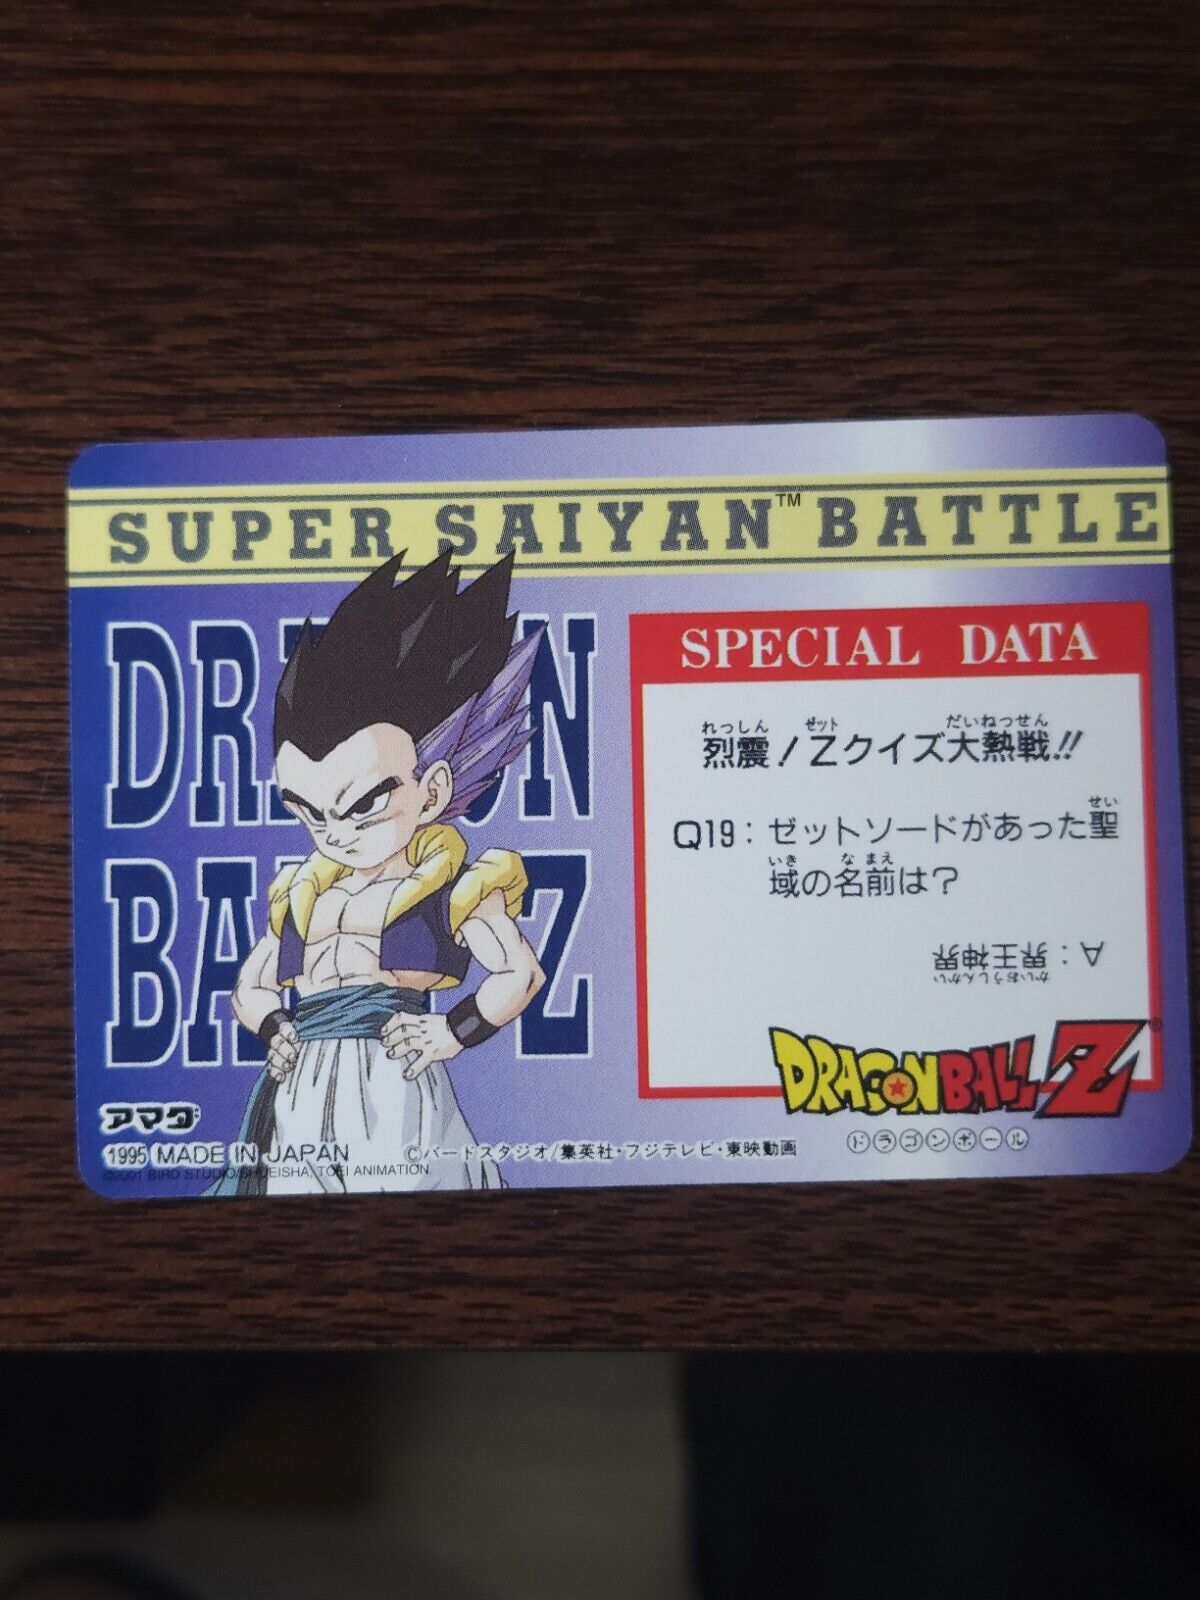 DRAGON BALL Z hero collection amada card 277 Errors & Oddities